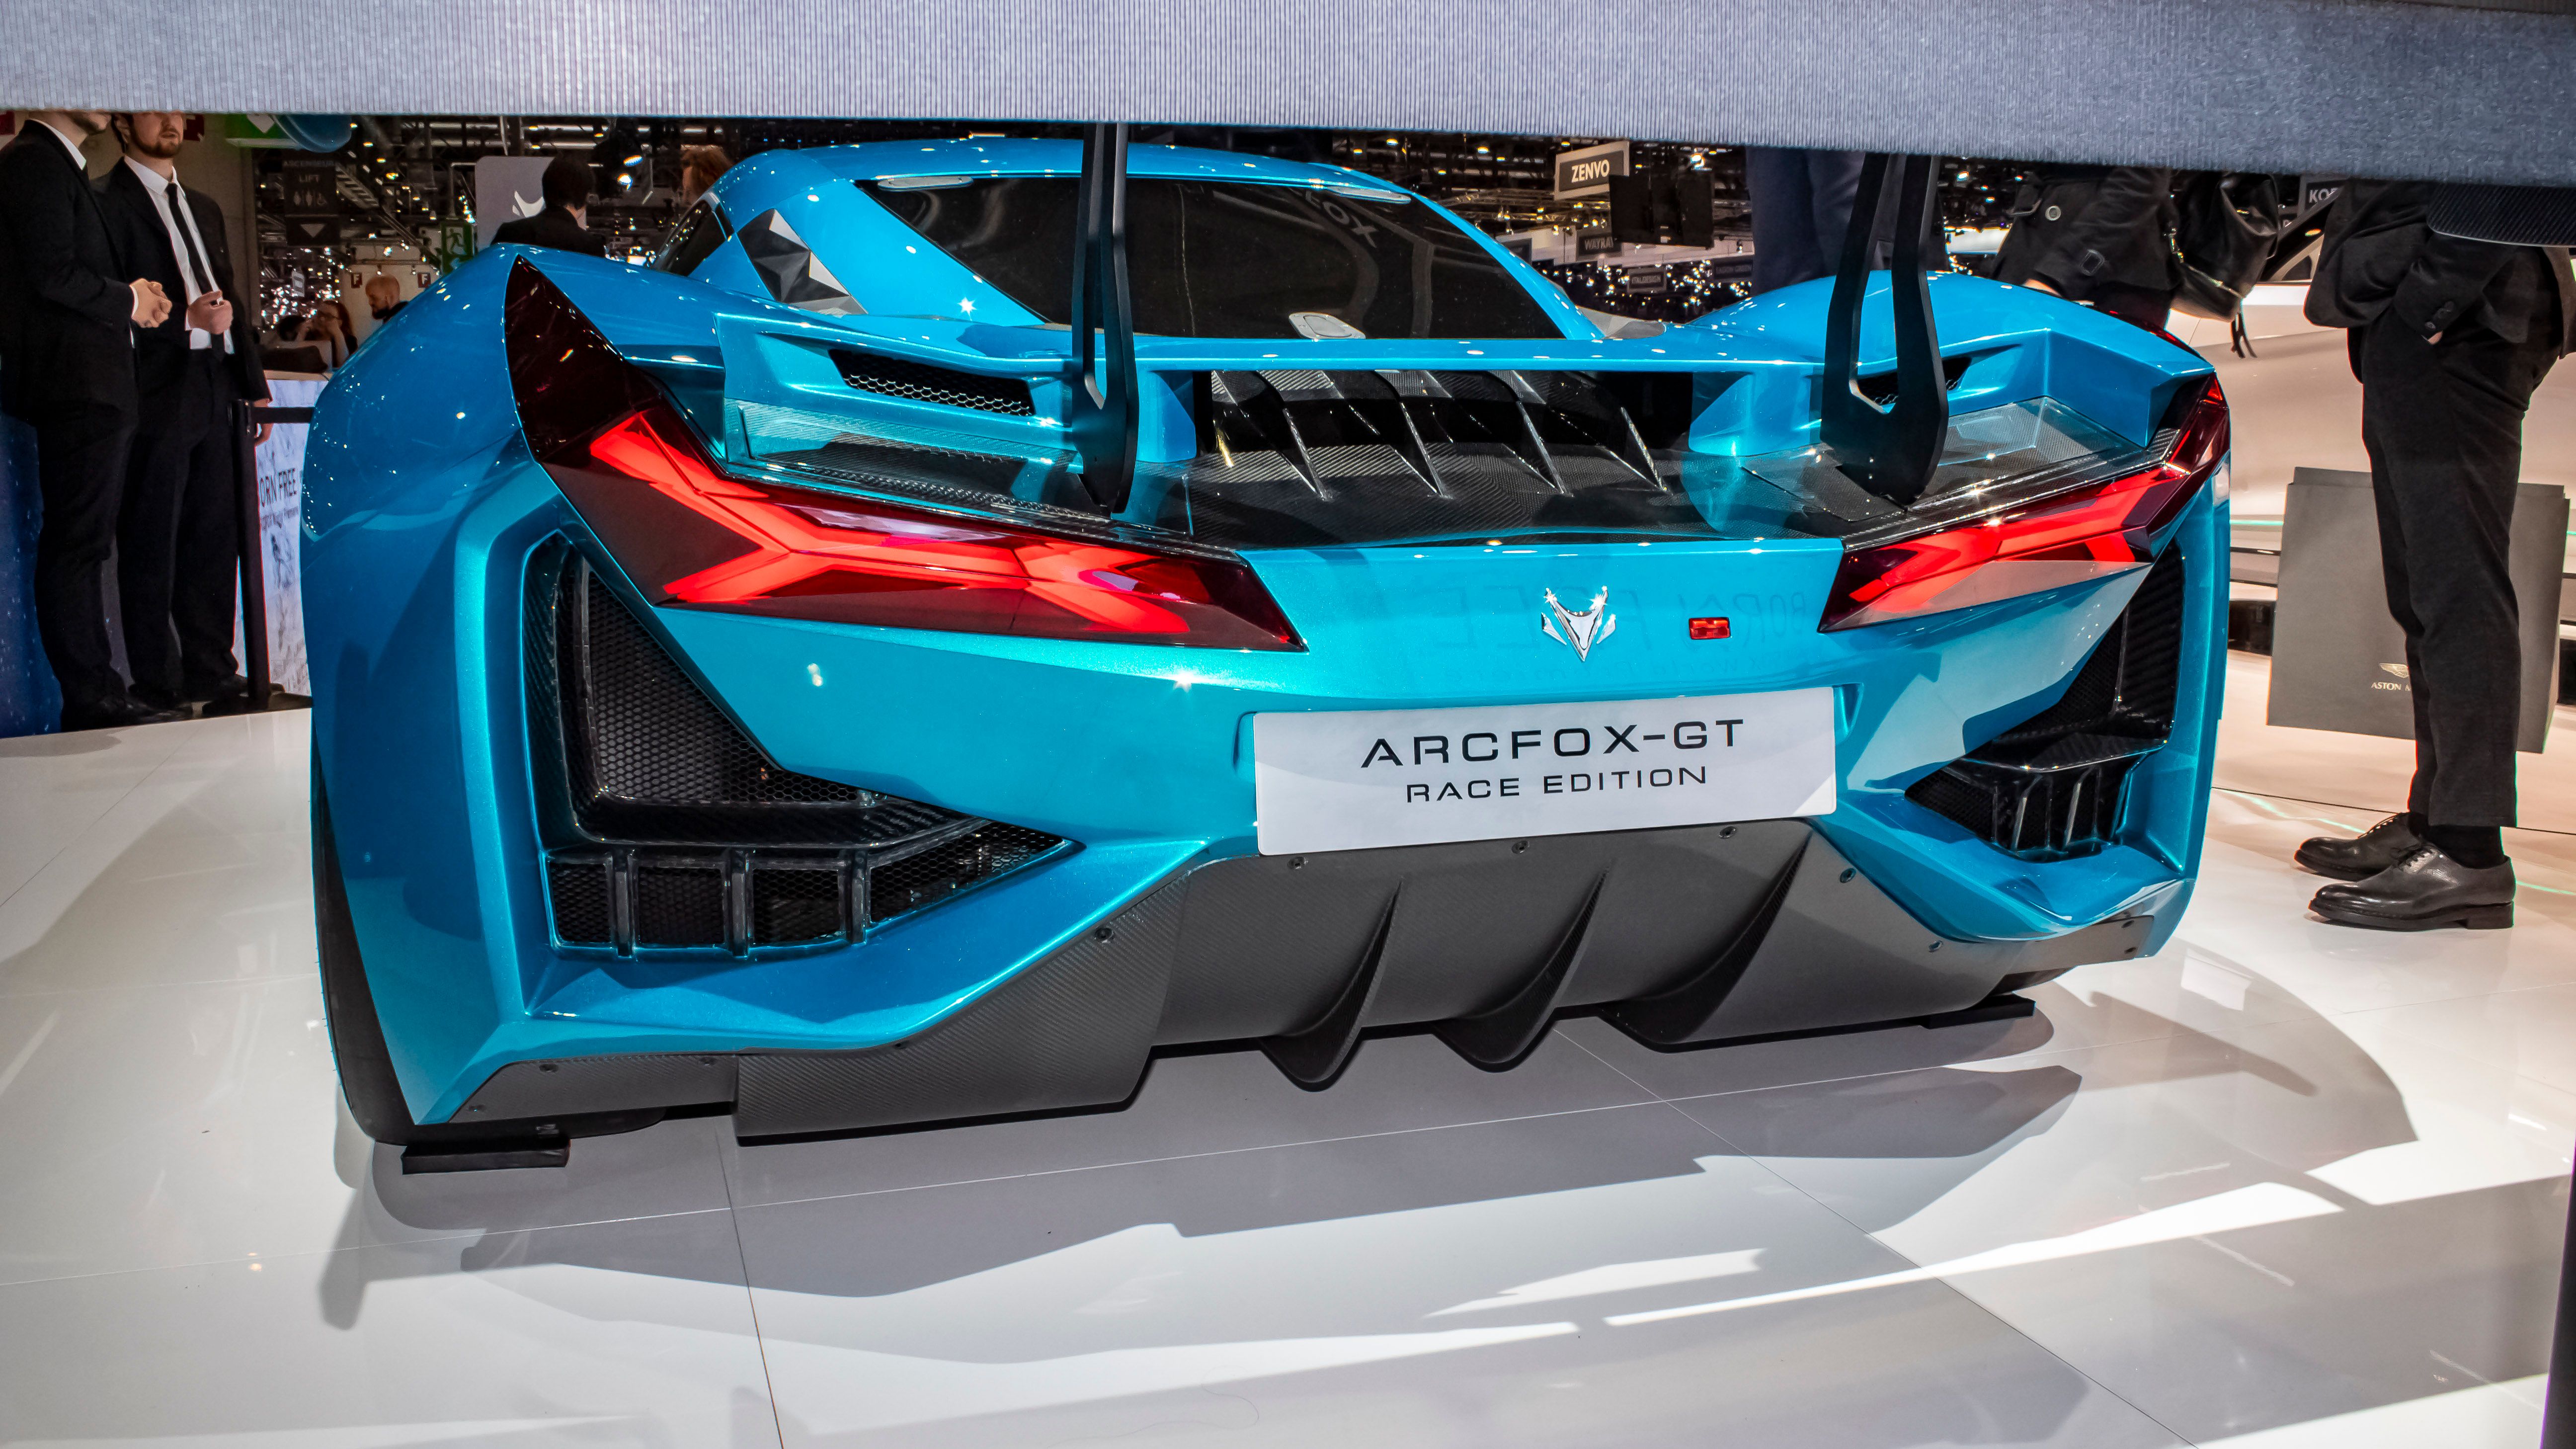 2021 Arctic Fox ARCFOX-GT Race Edition